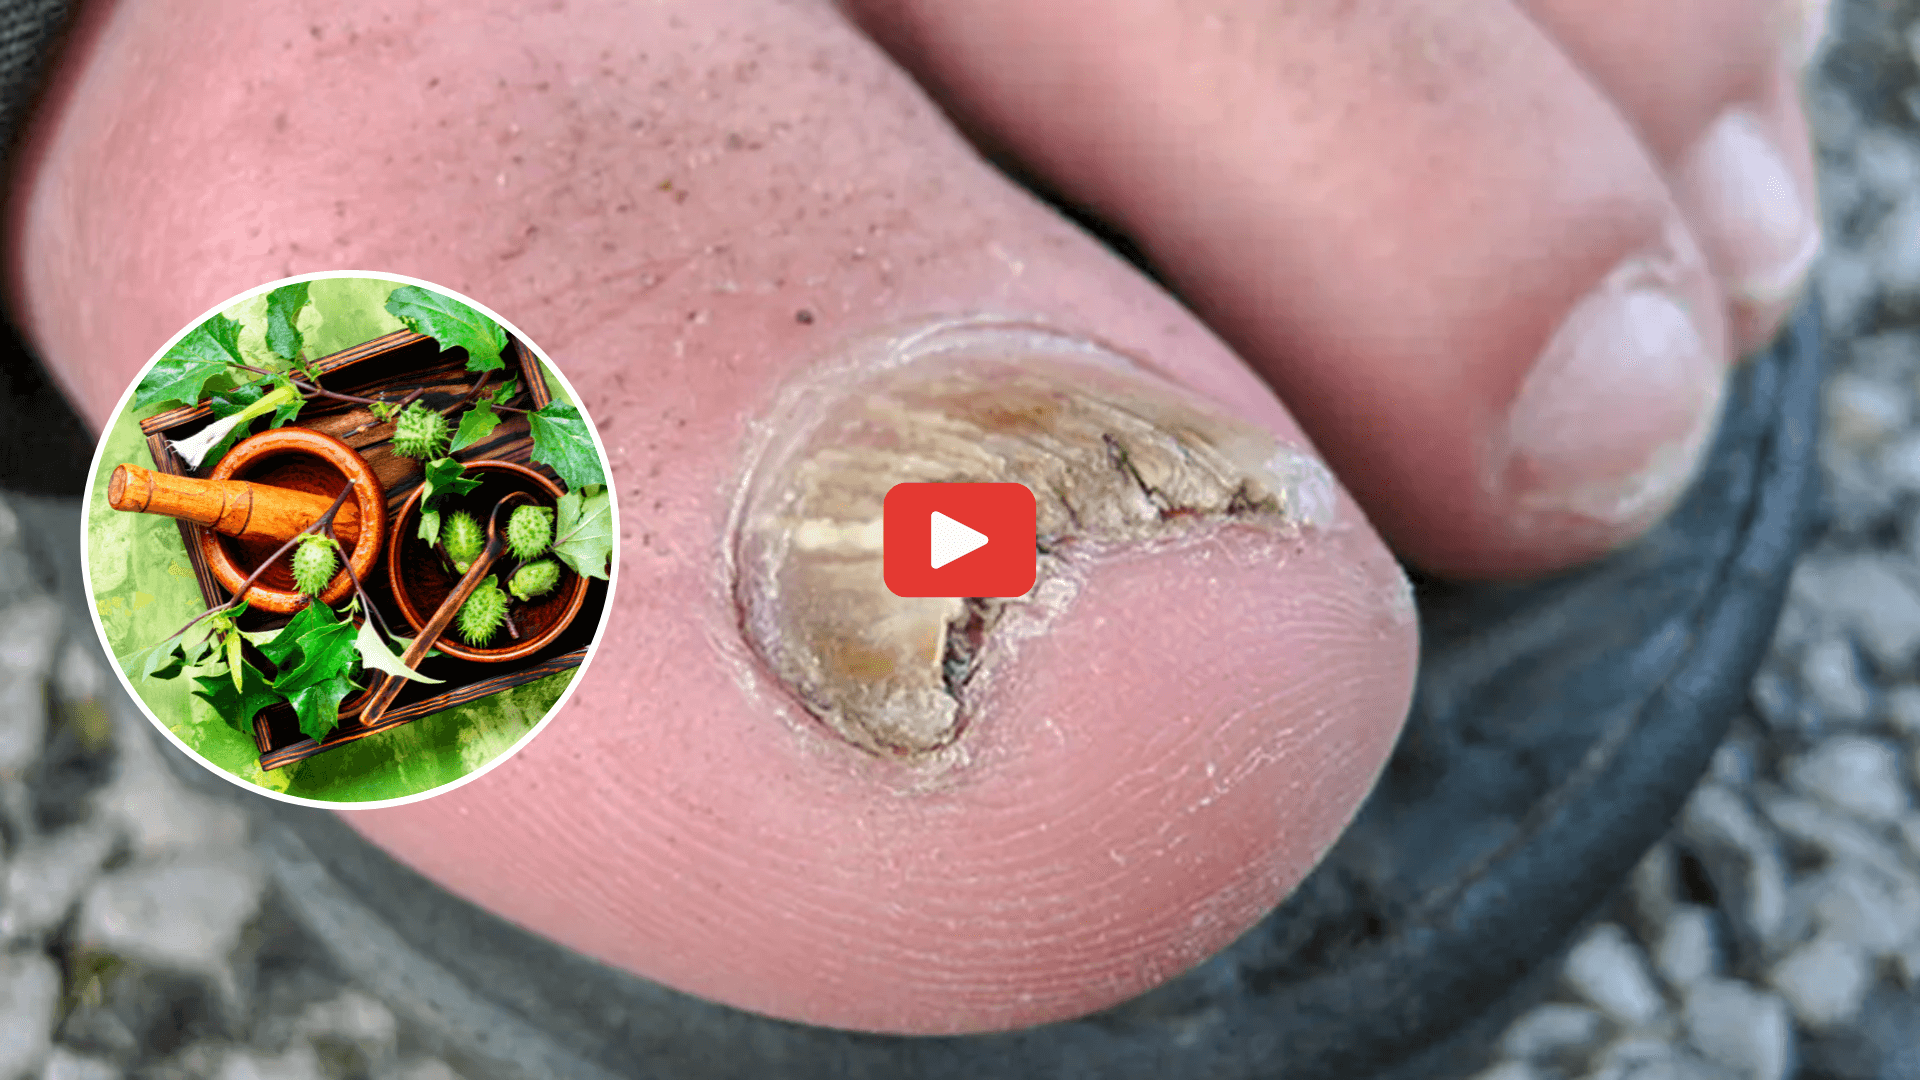 remove nail fungus video cover